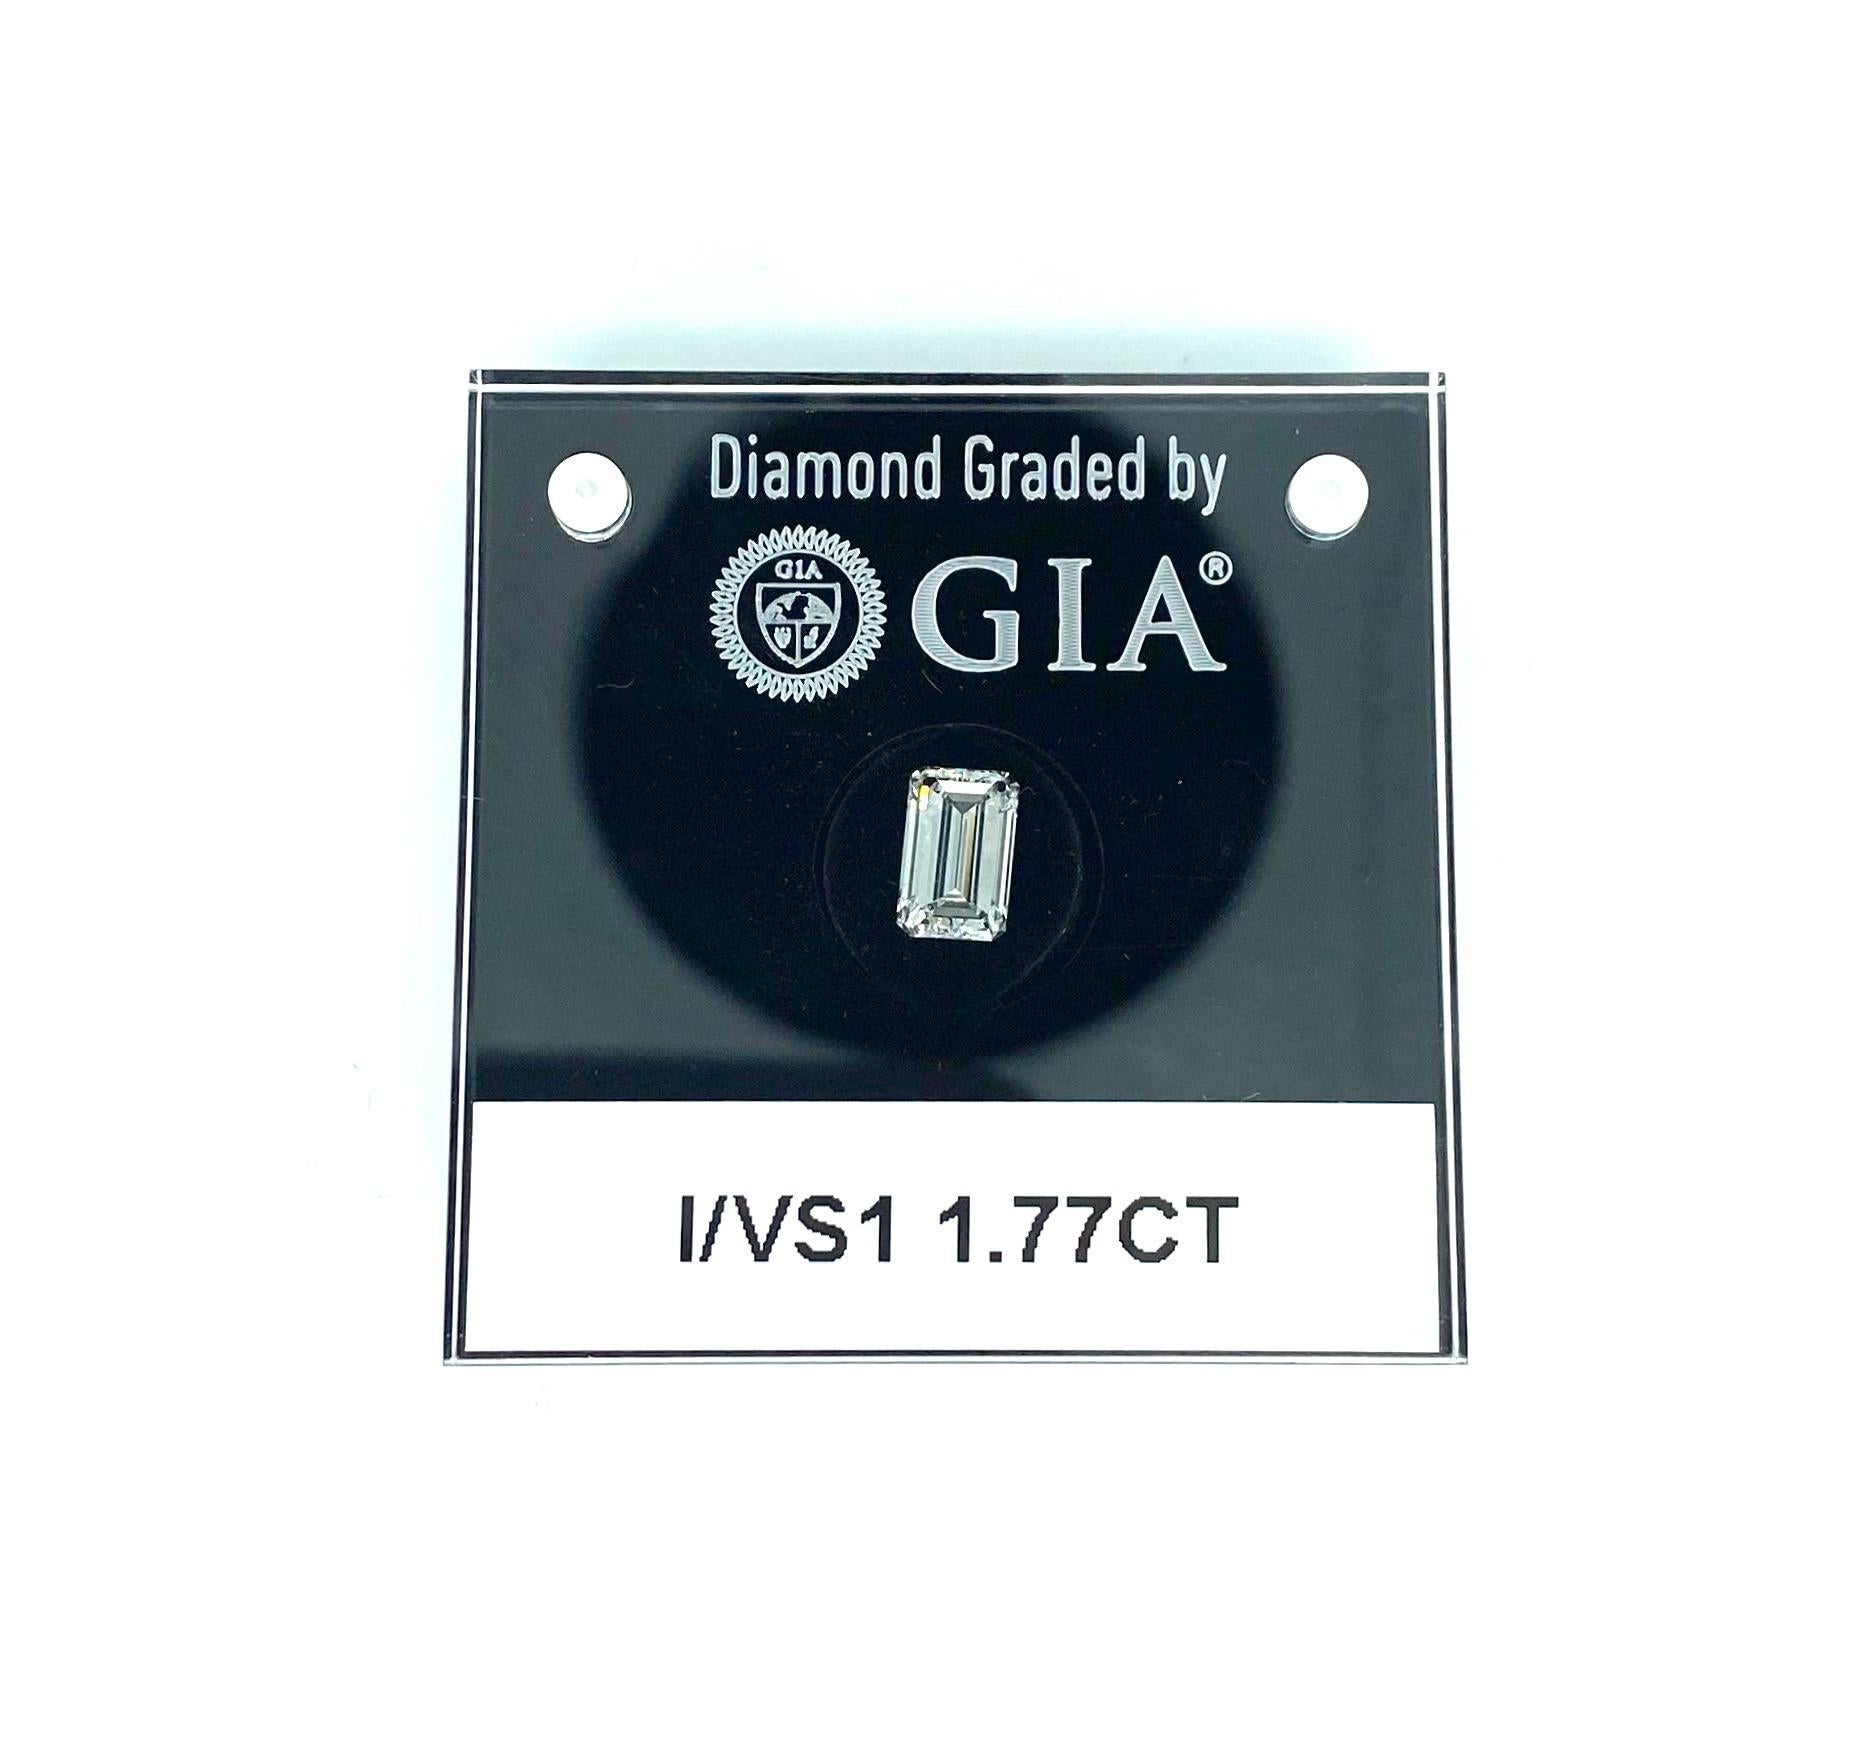 GIA-zertifizierter Diamant mit 1,77 Karat im Smaragdschliff
I / VS1

Inklusive GIA-Zertifikat
Berichtsnummer: 2211297878